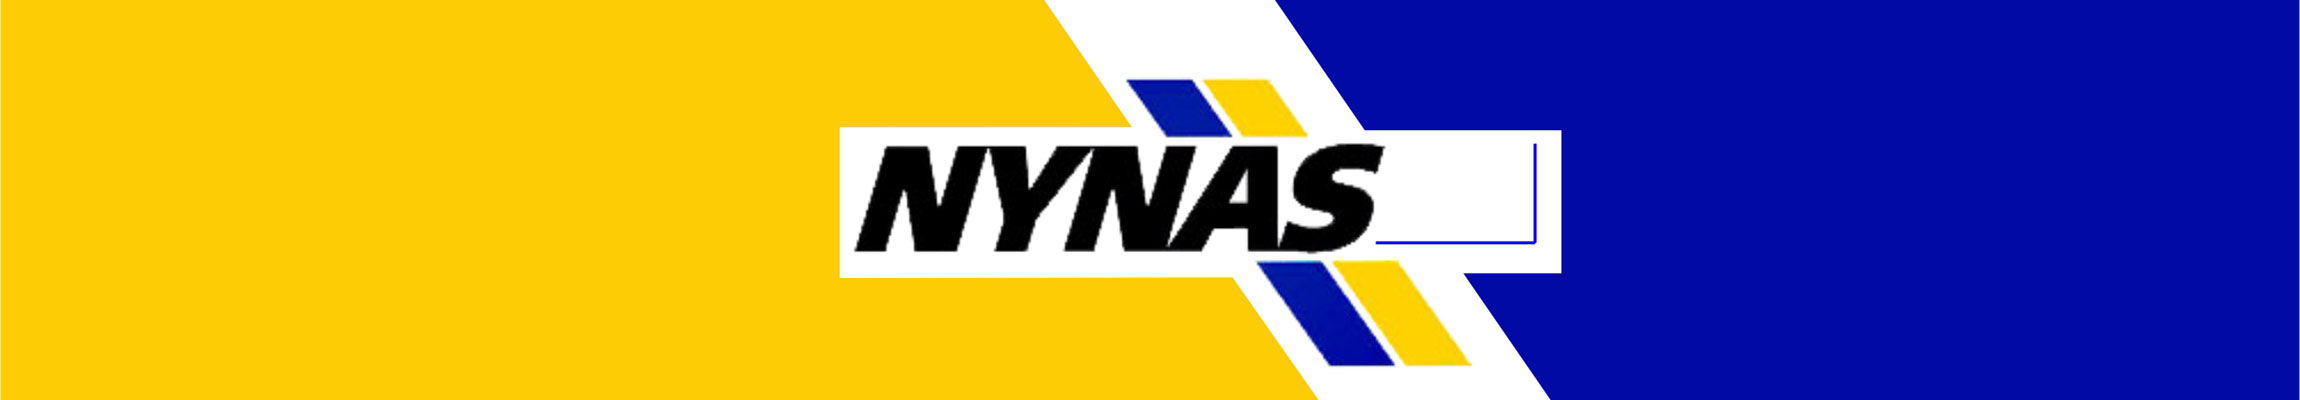 nynas logo معرفی شرکت کمپانی